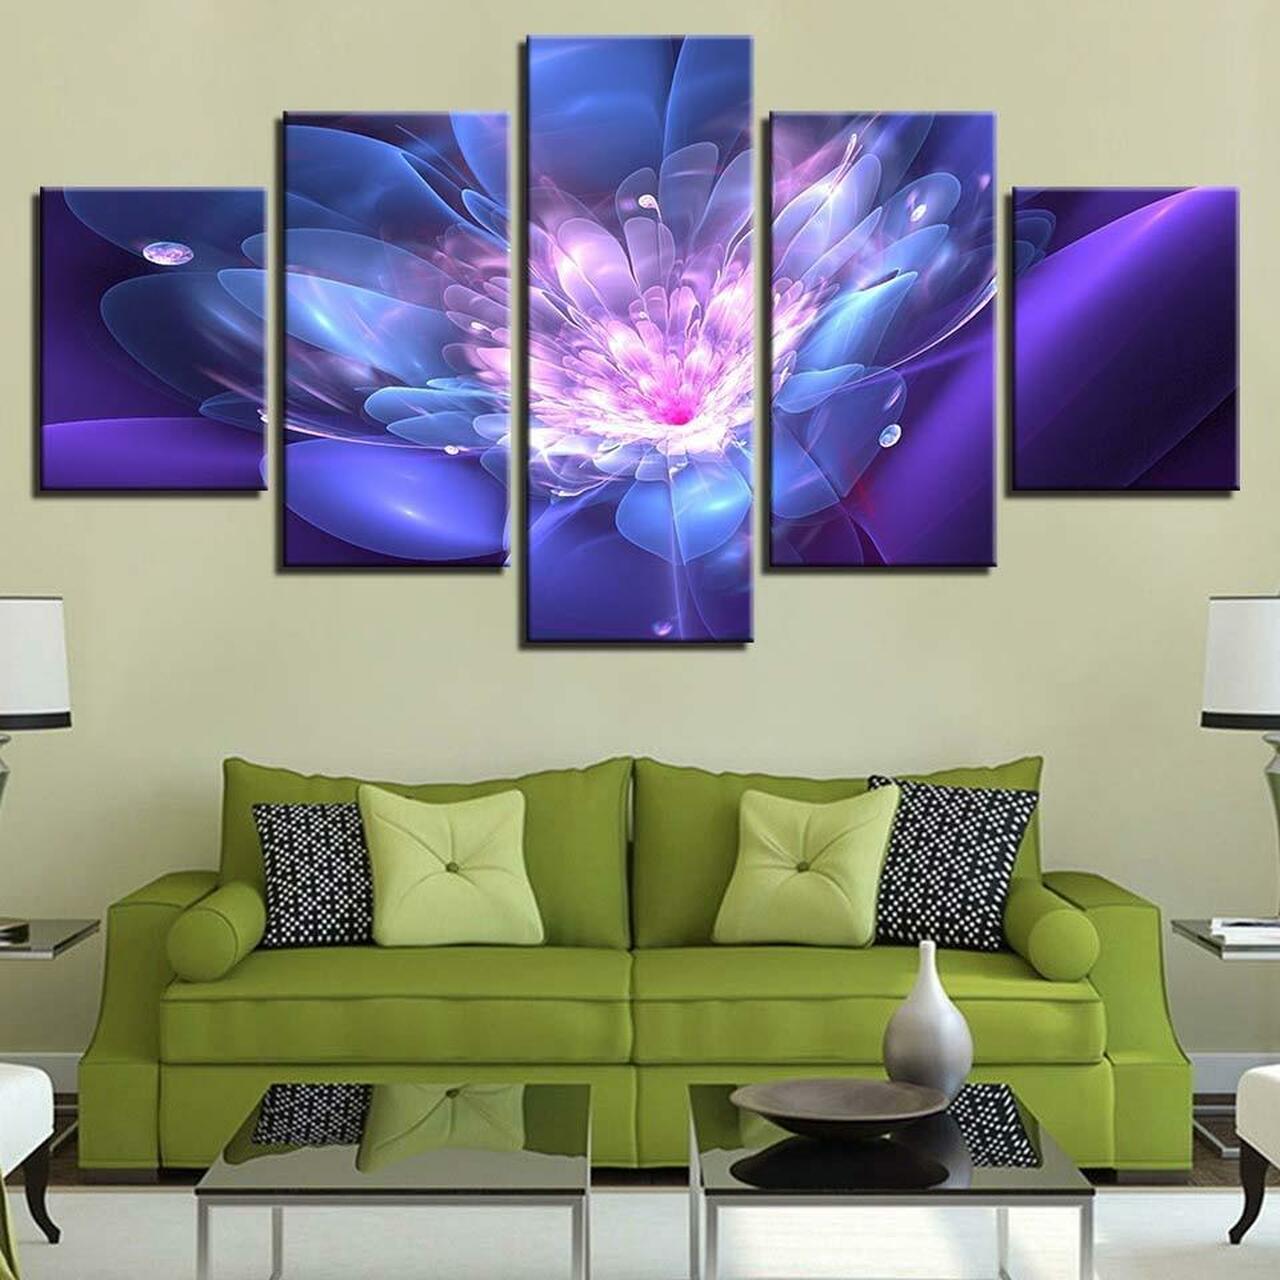 Shades Of Purple 5 Piece Canvas Art Wall Decor